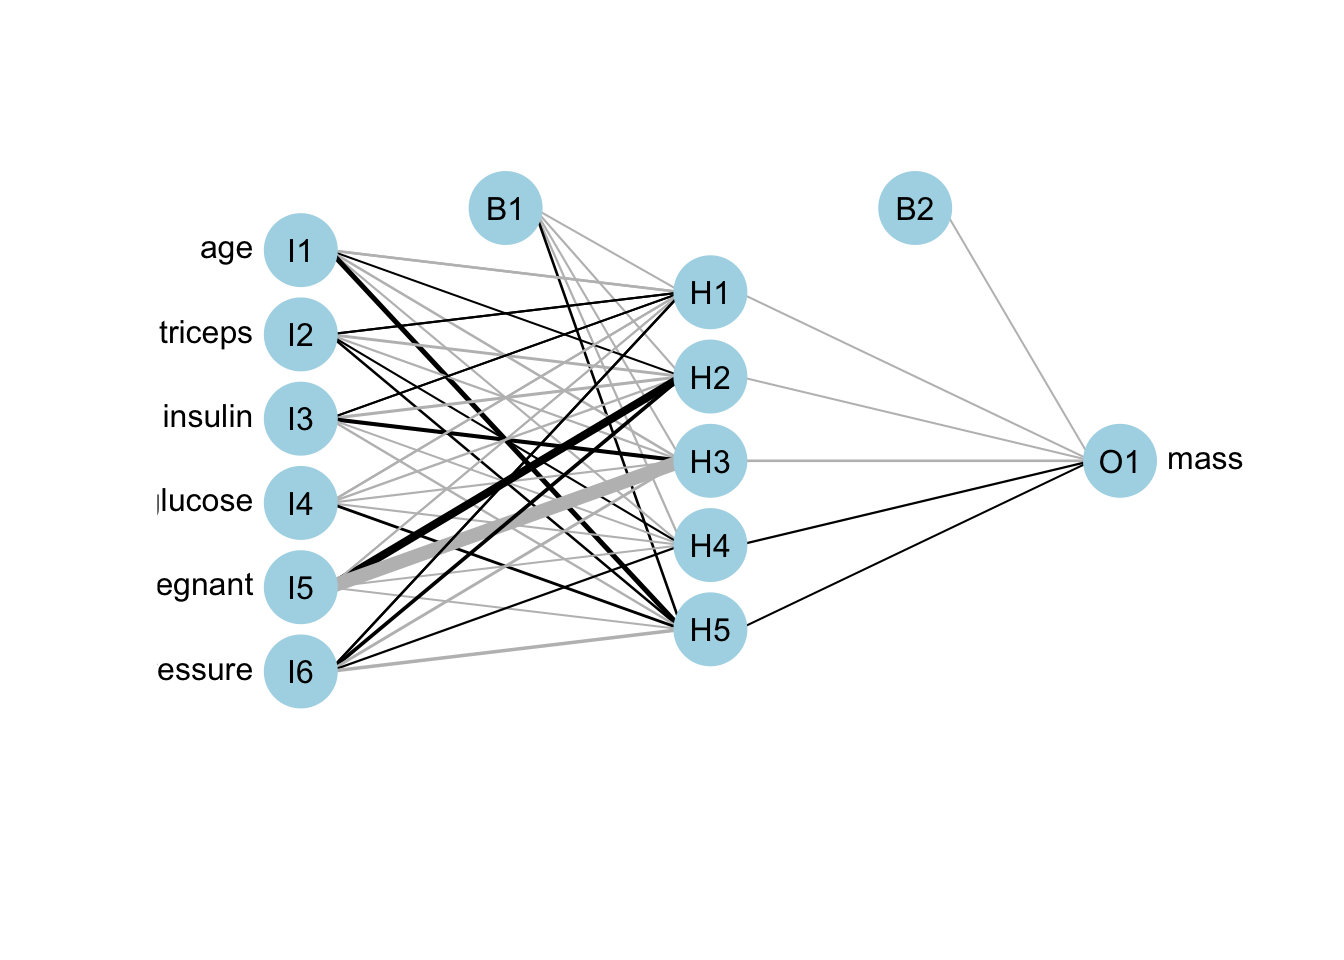 ANN network visualisation for regression